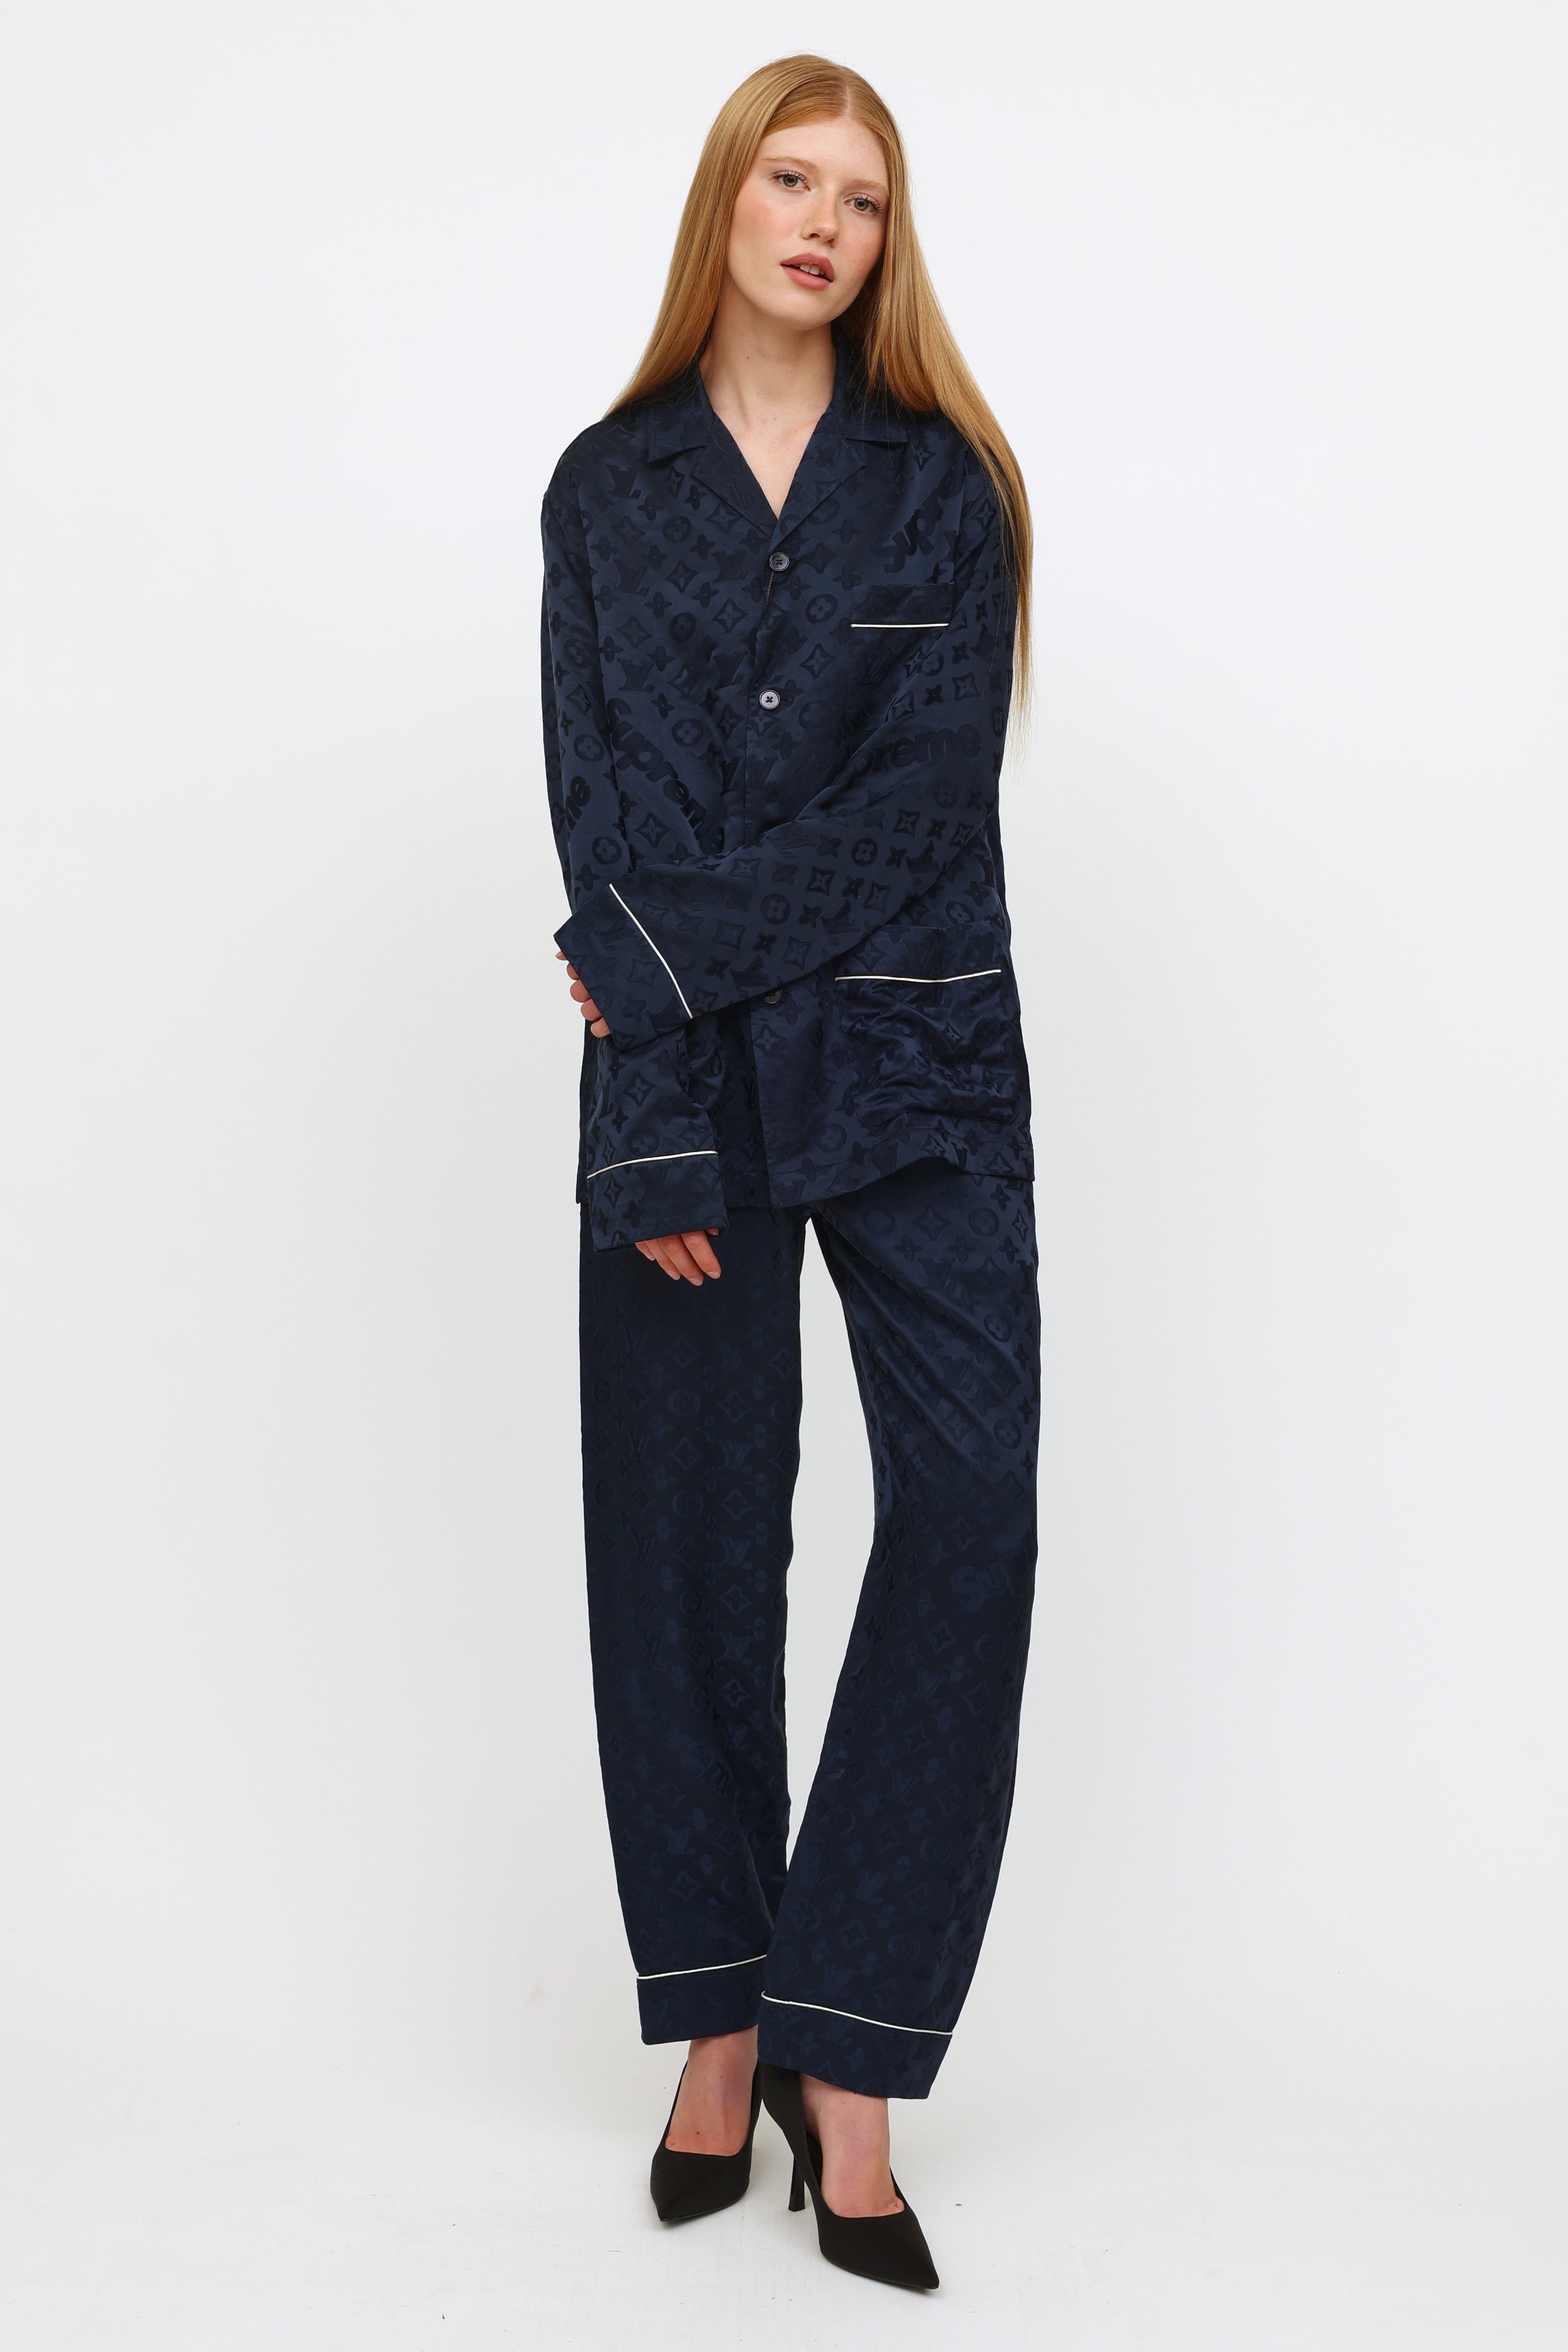 Marian Rivera Wears Louis Vuitton X Yayoi Kusama Pajamas Worth Over P230,000